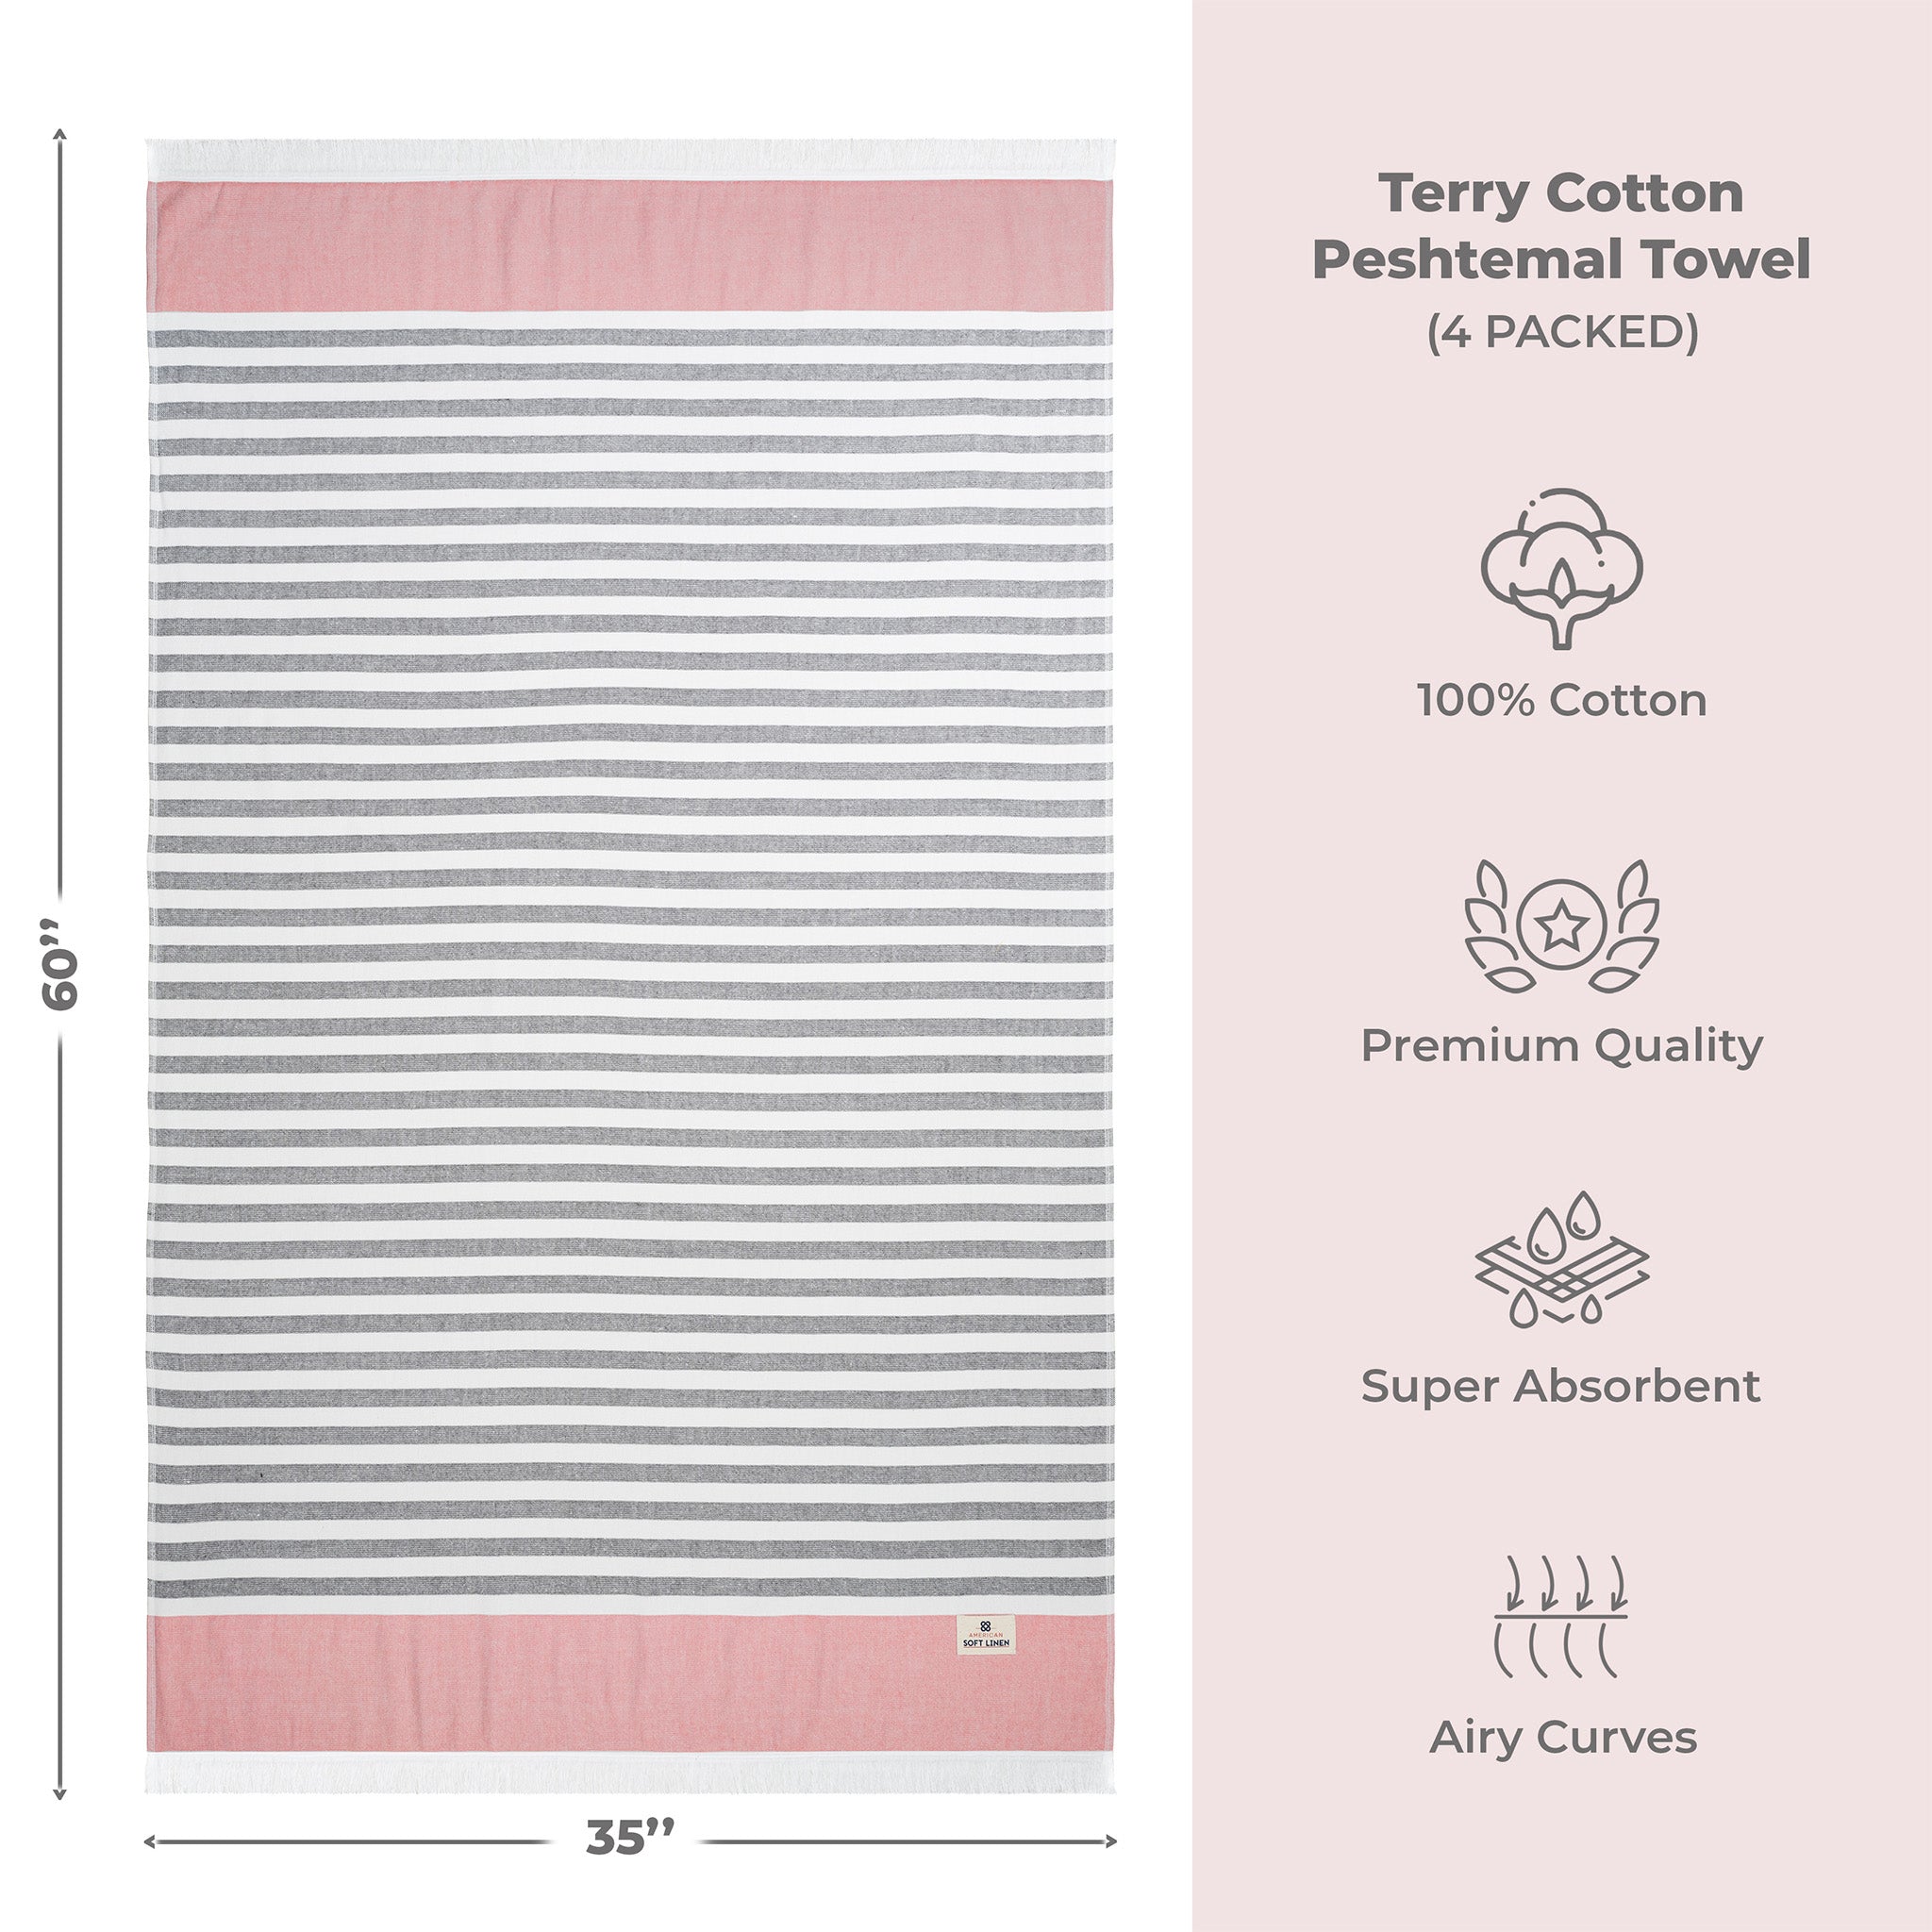 4 Packed 100% Cotton Terry Peshtemal & Beach Towel Rose-03